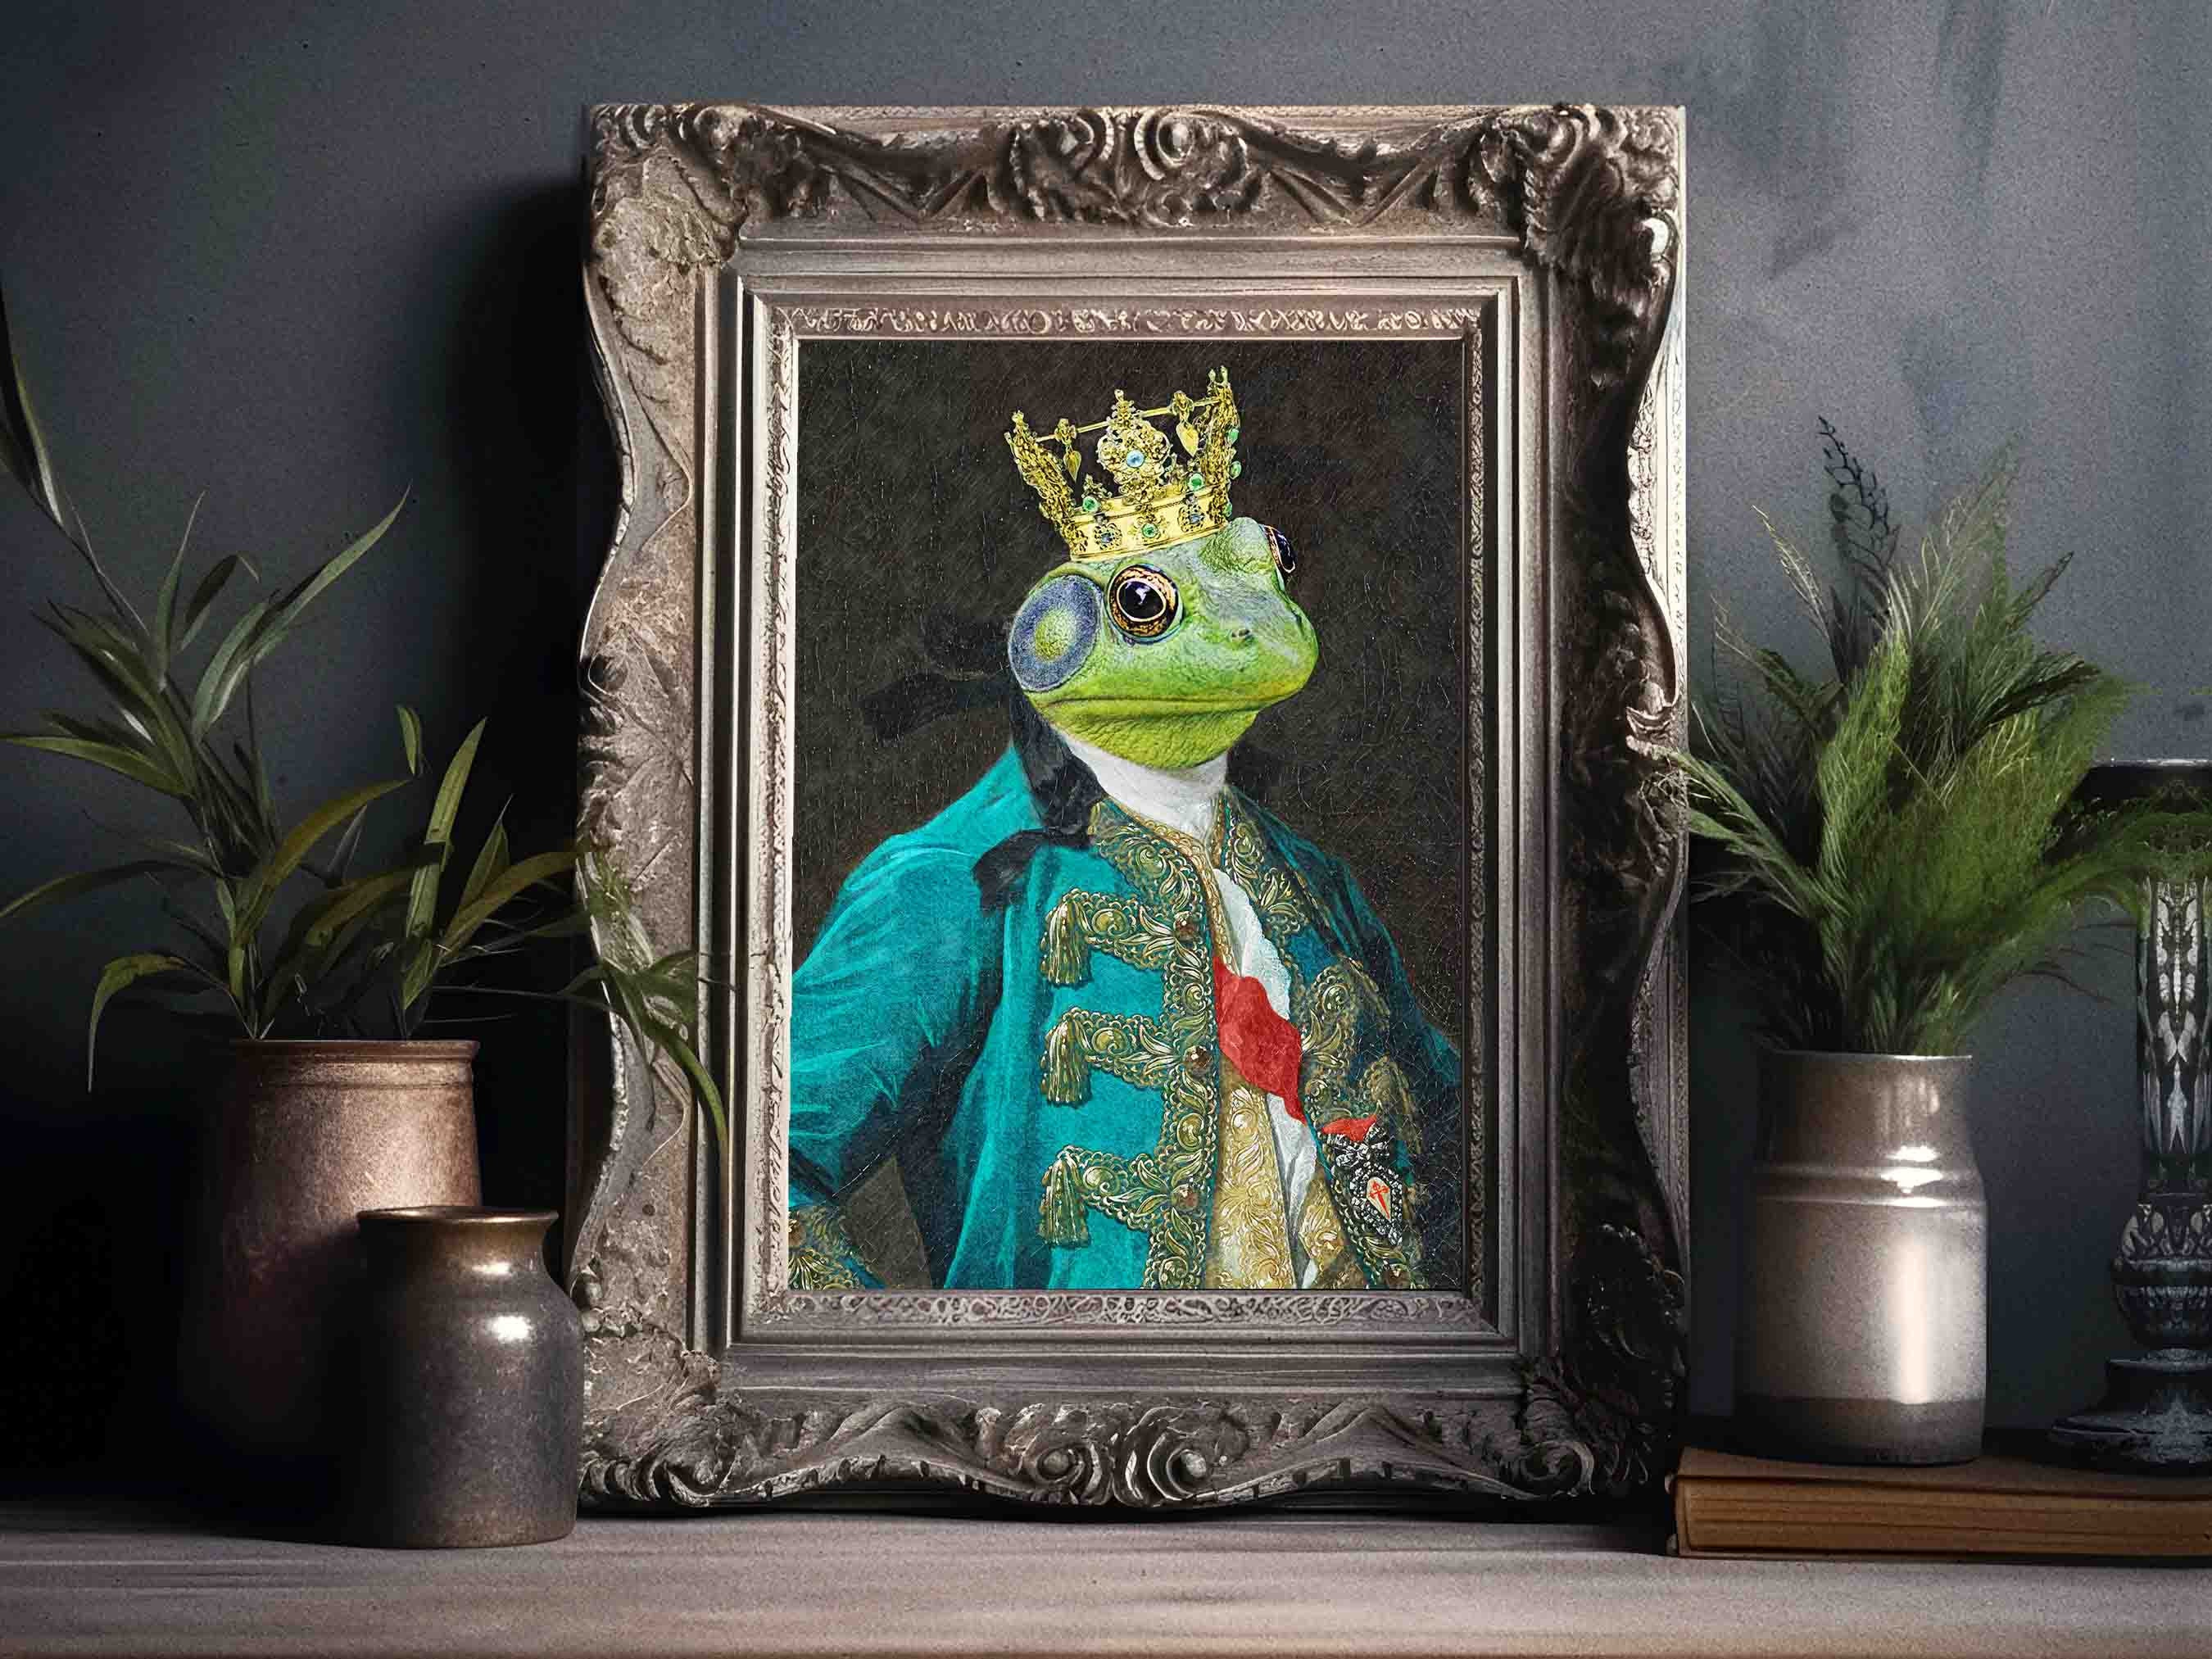 Retal tela frogs de Art Gallery - Costurika telas